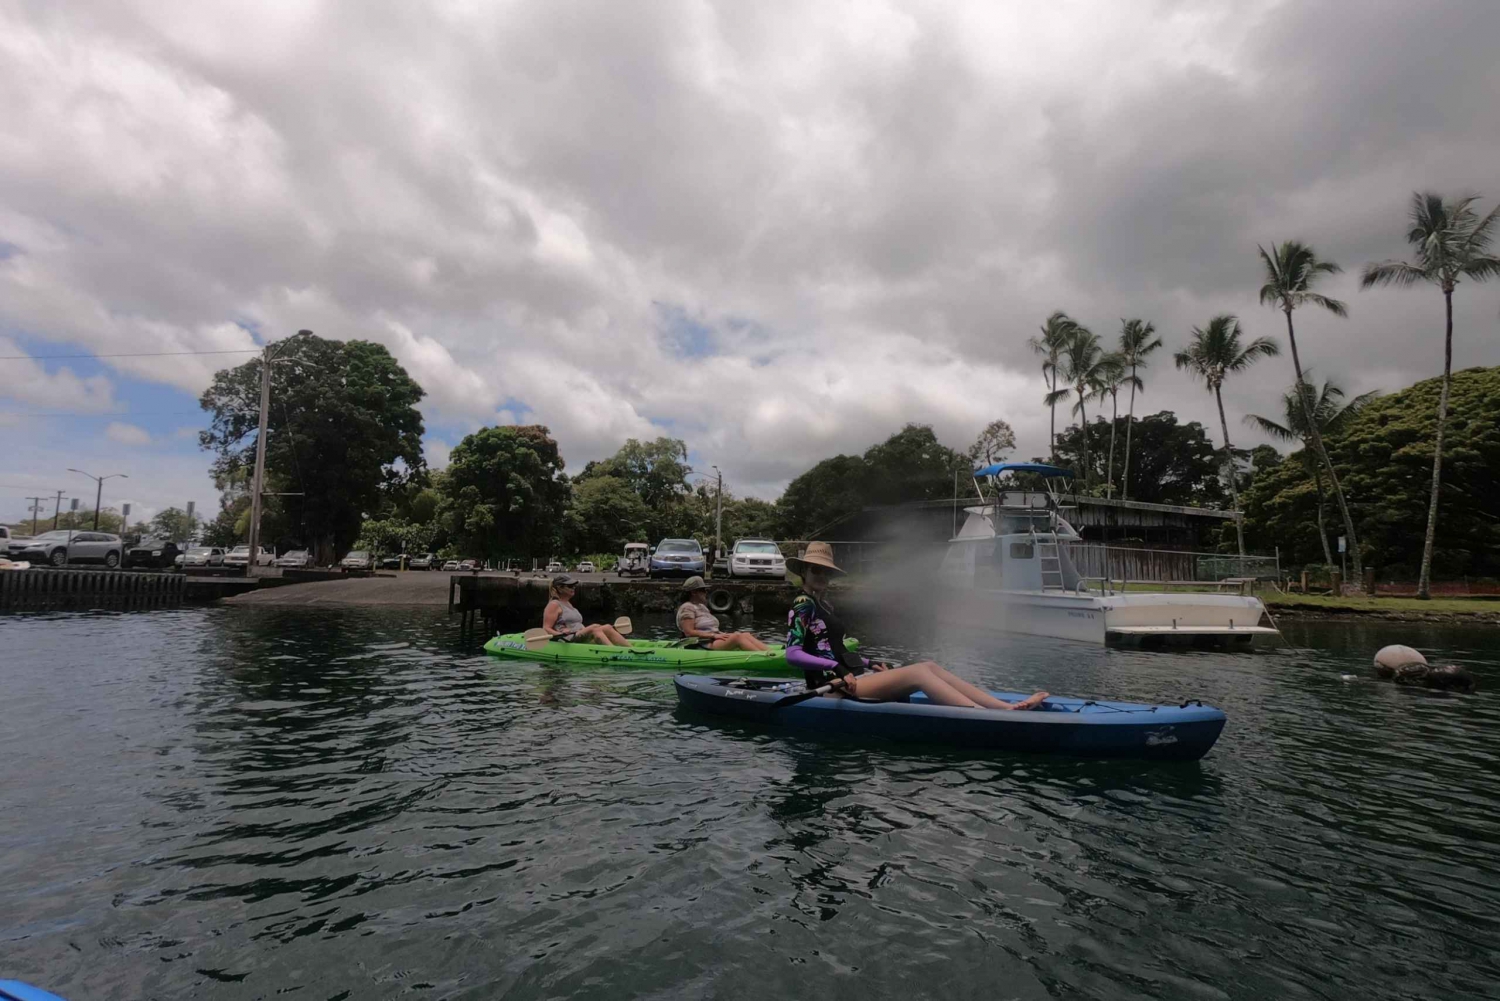 Hilo: Wailoa River to King Kamehameha Guided Kayaking Tour